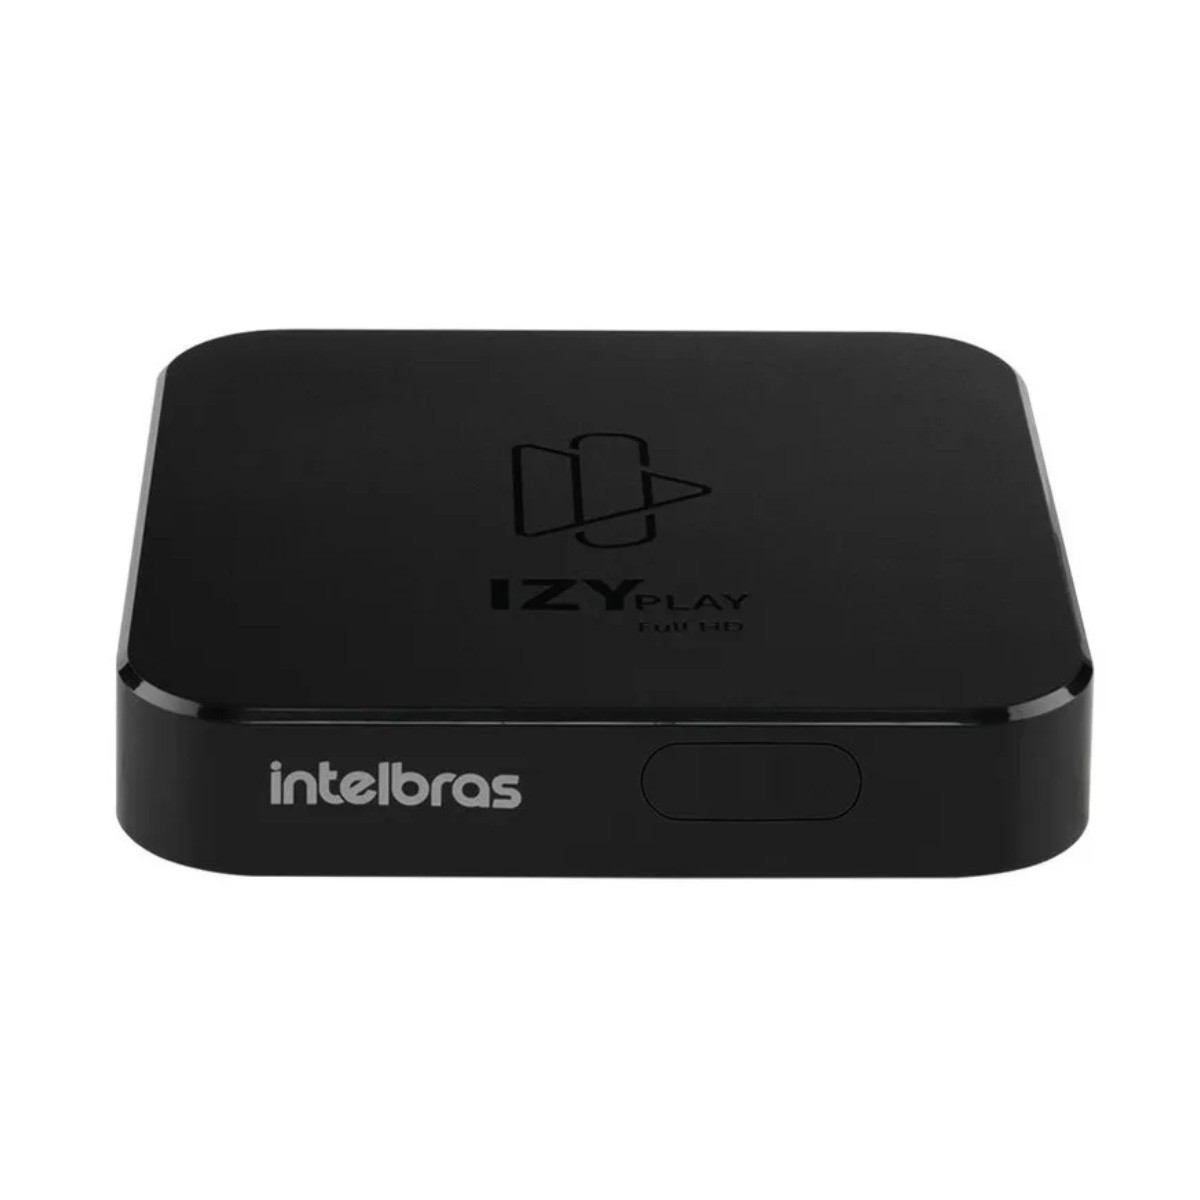 Smart Box Android Tv Izy Play Intelbras Hdmi Youtube Netflix